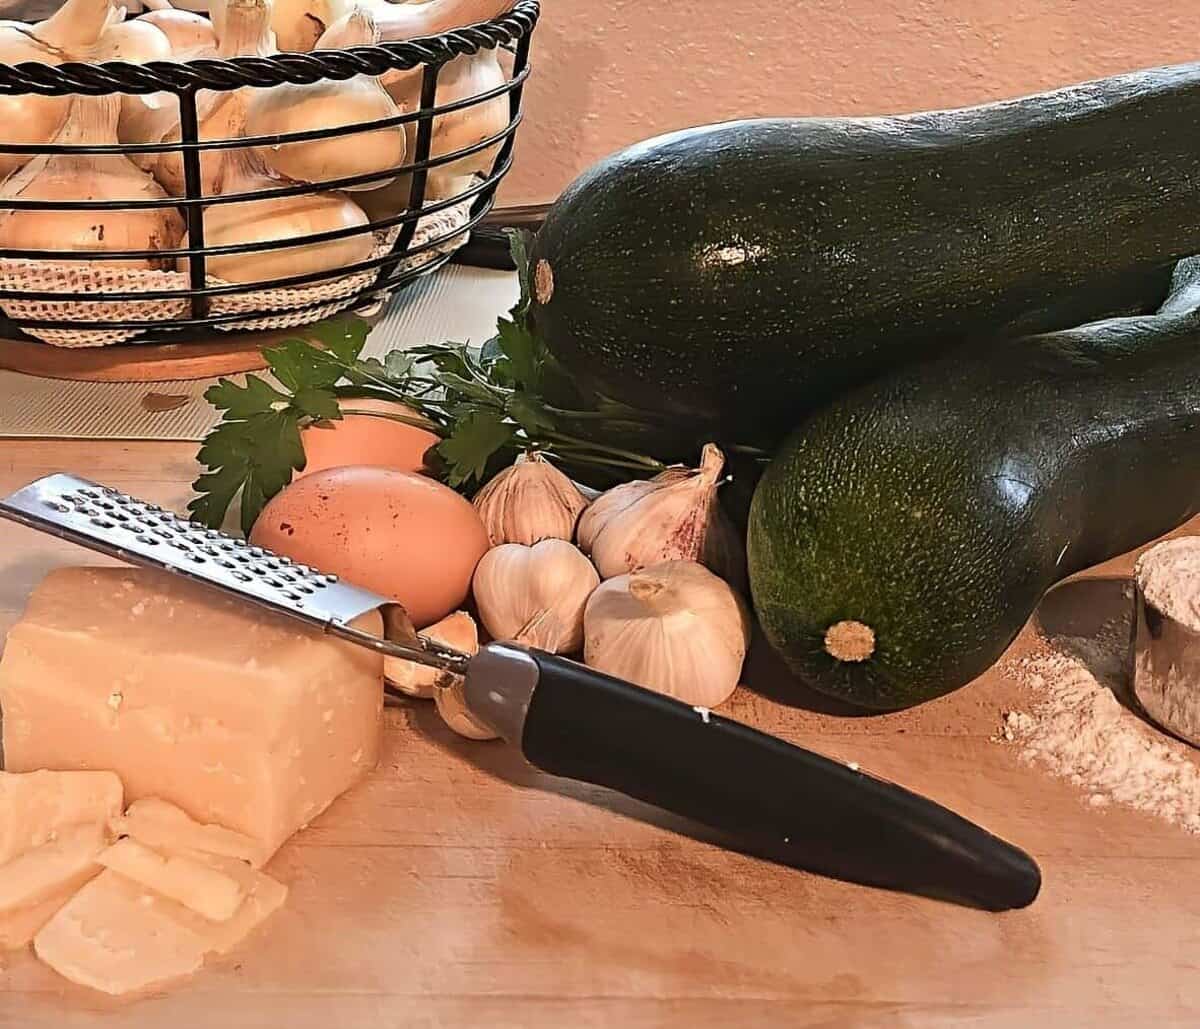 zucchini bread ingredients; parmesan cheese, eggs, garlic, parsley, zucchini, flour, onions